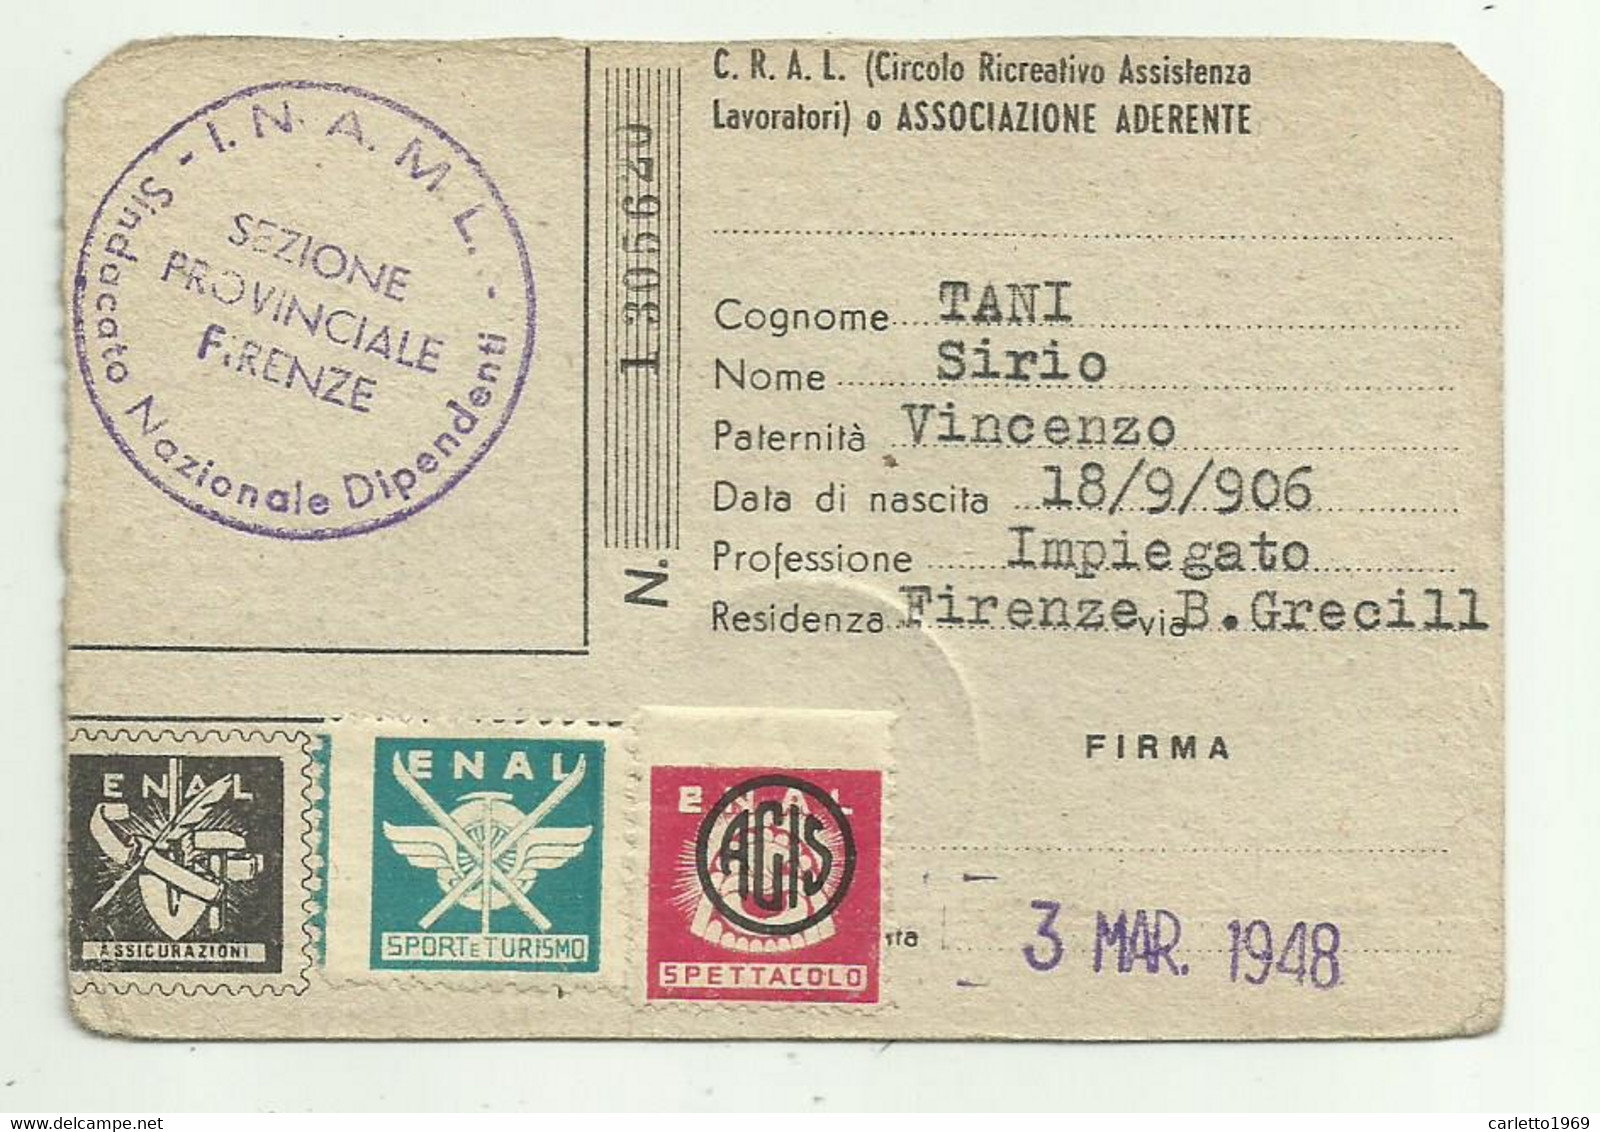 TESSERA ENTE NAZIONALE ASSISTENZA LAVORATORI  - FIRENZE 1948 - Sammlungen